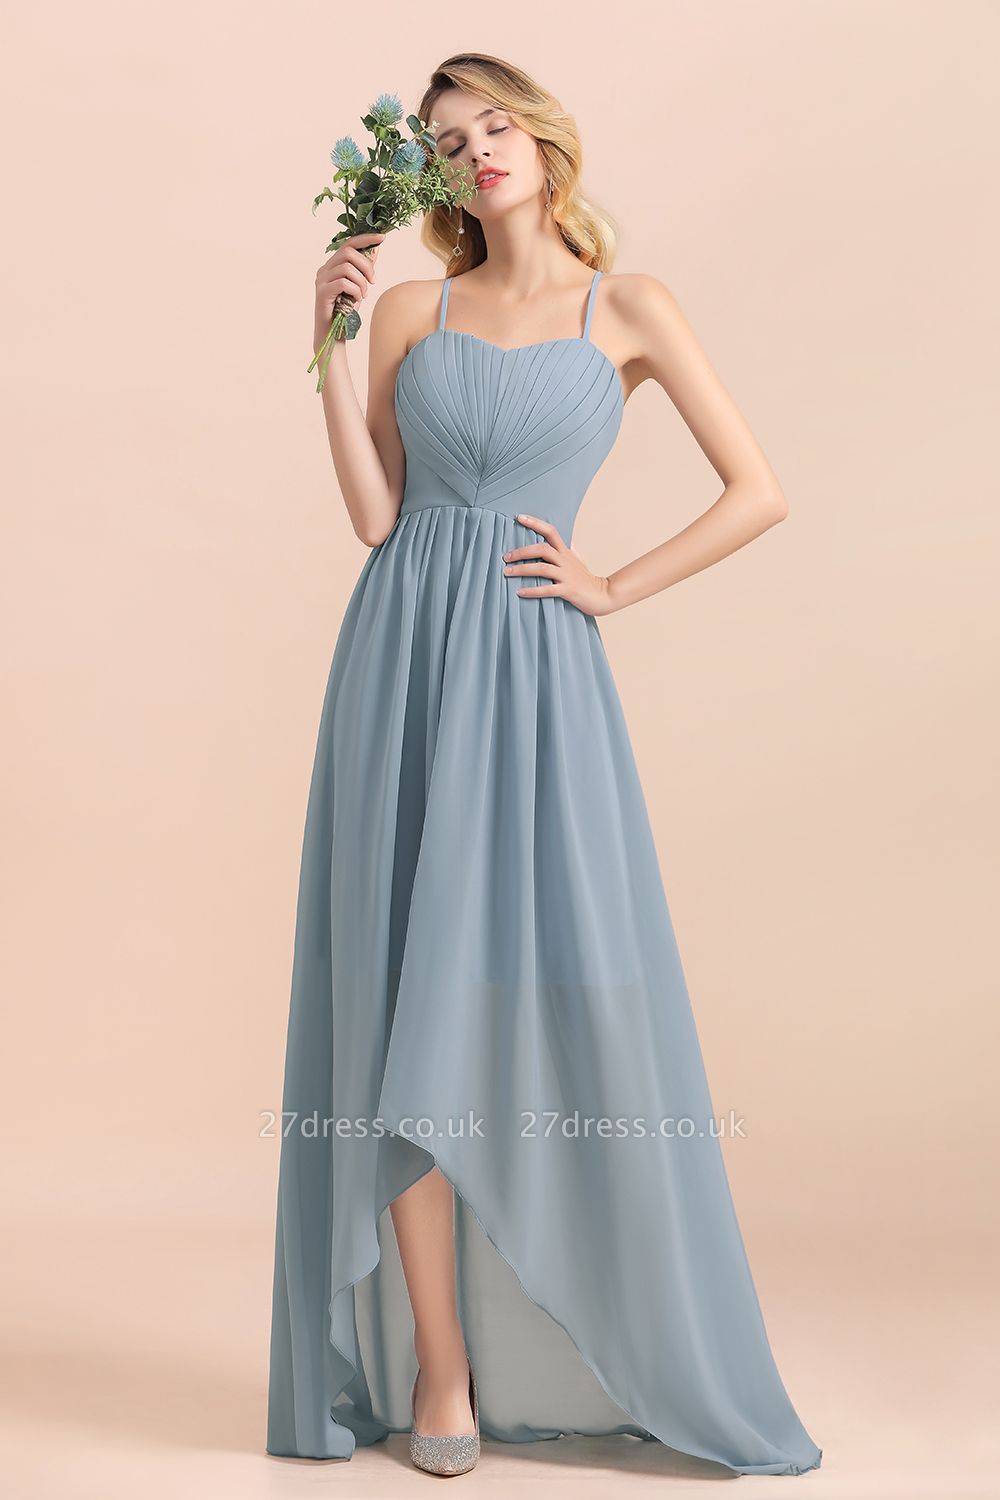 Stylish Halter Dusty Blue Hi-Lo Bridesmaid Dresses Backless Wedding Guest Dress